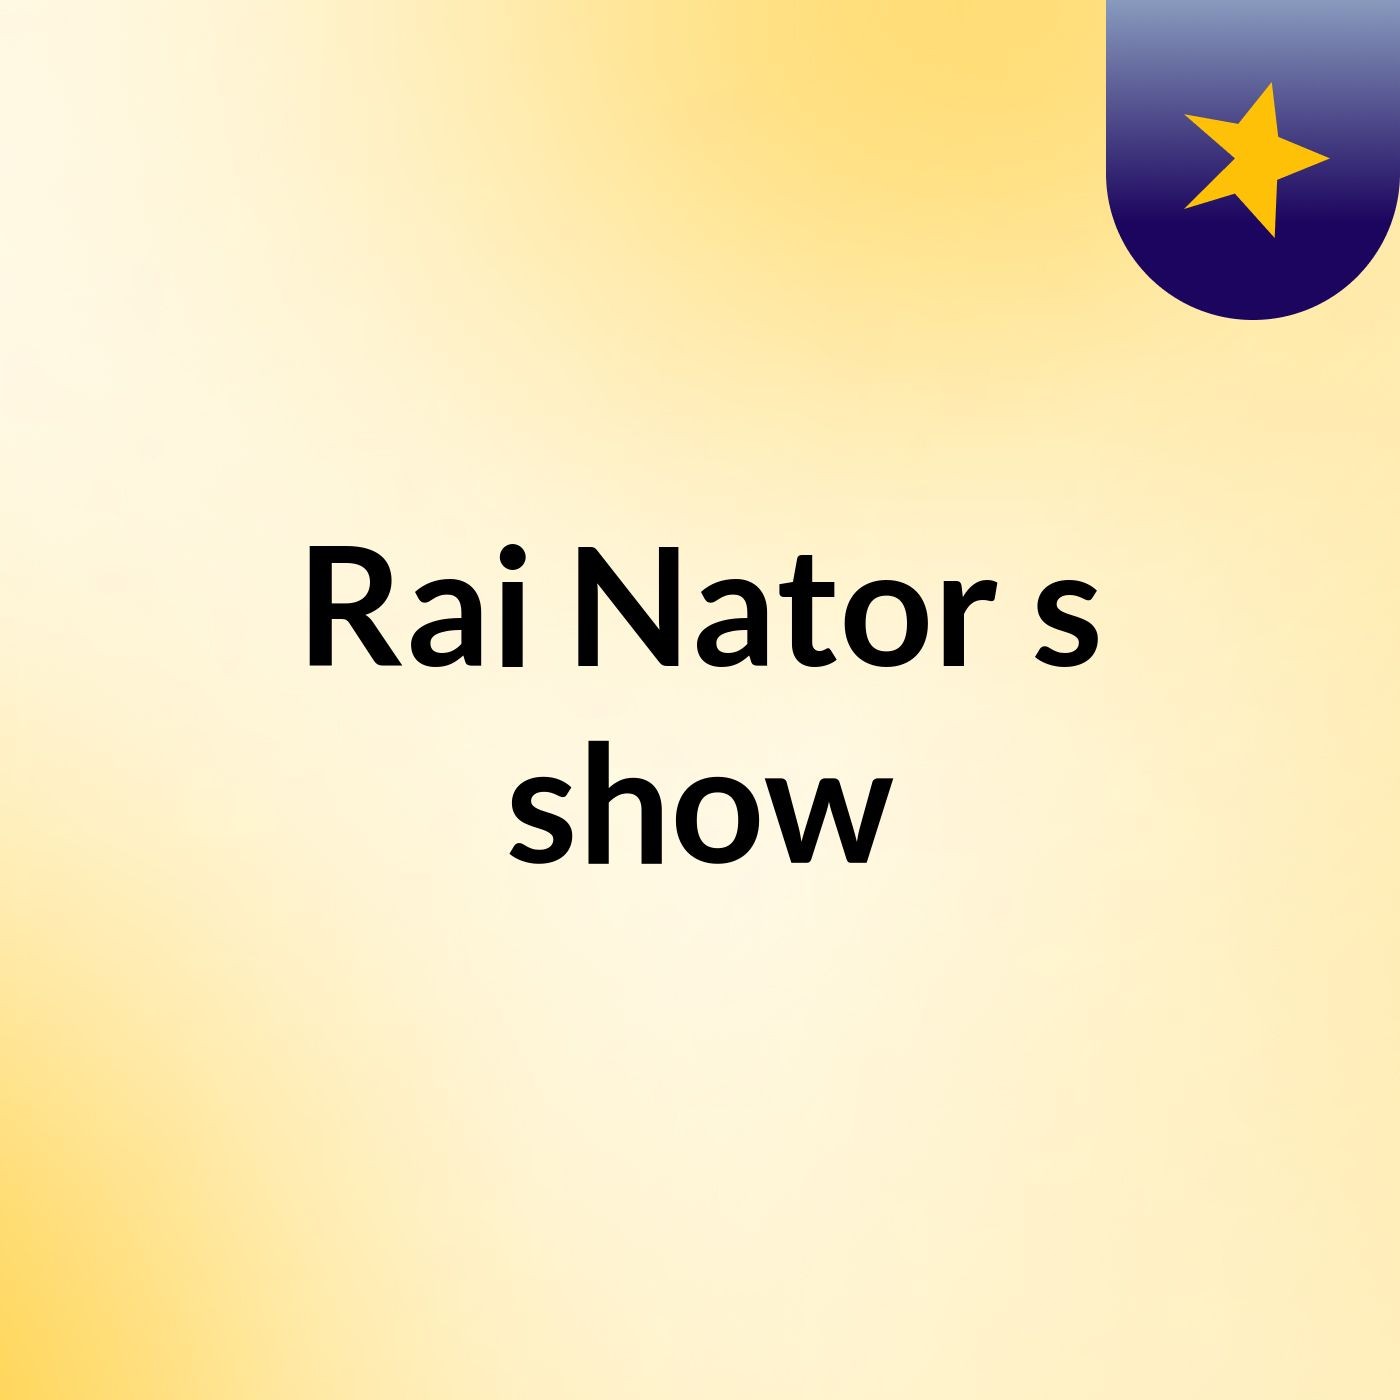 Rai Nator's show